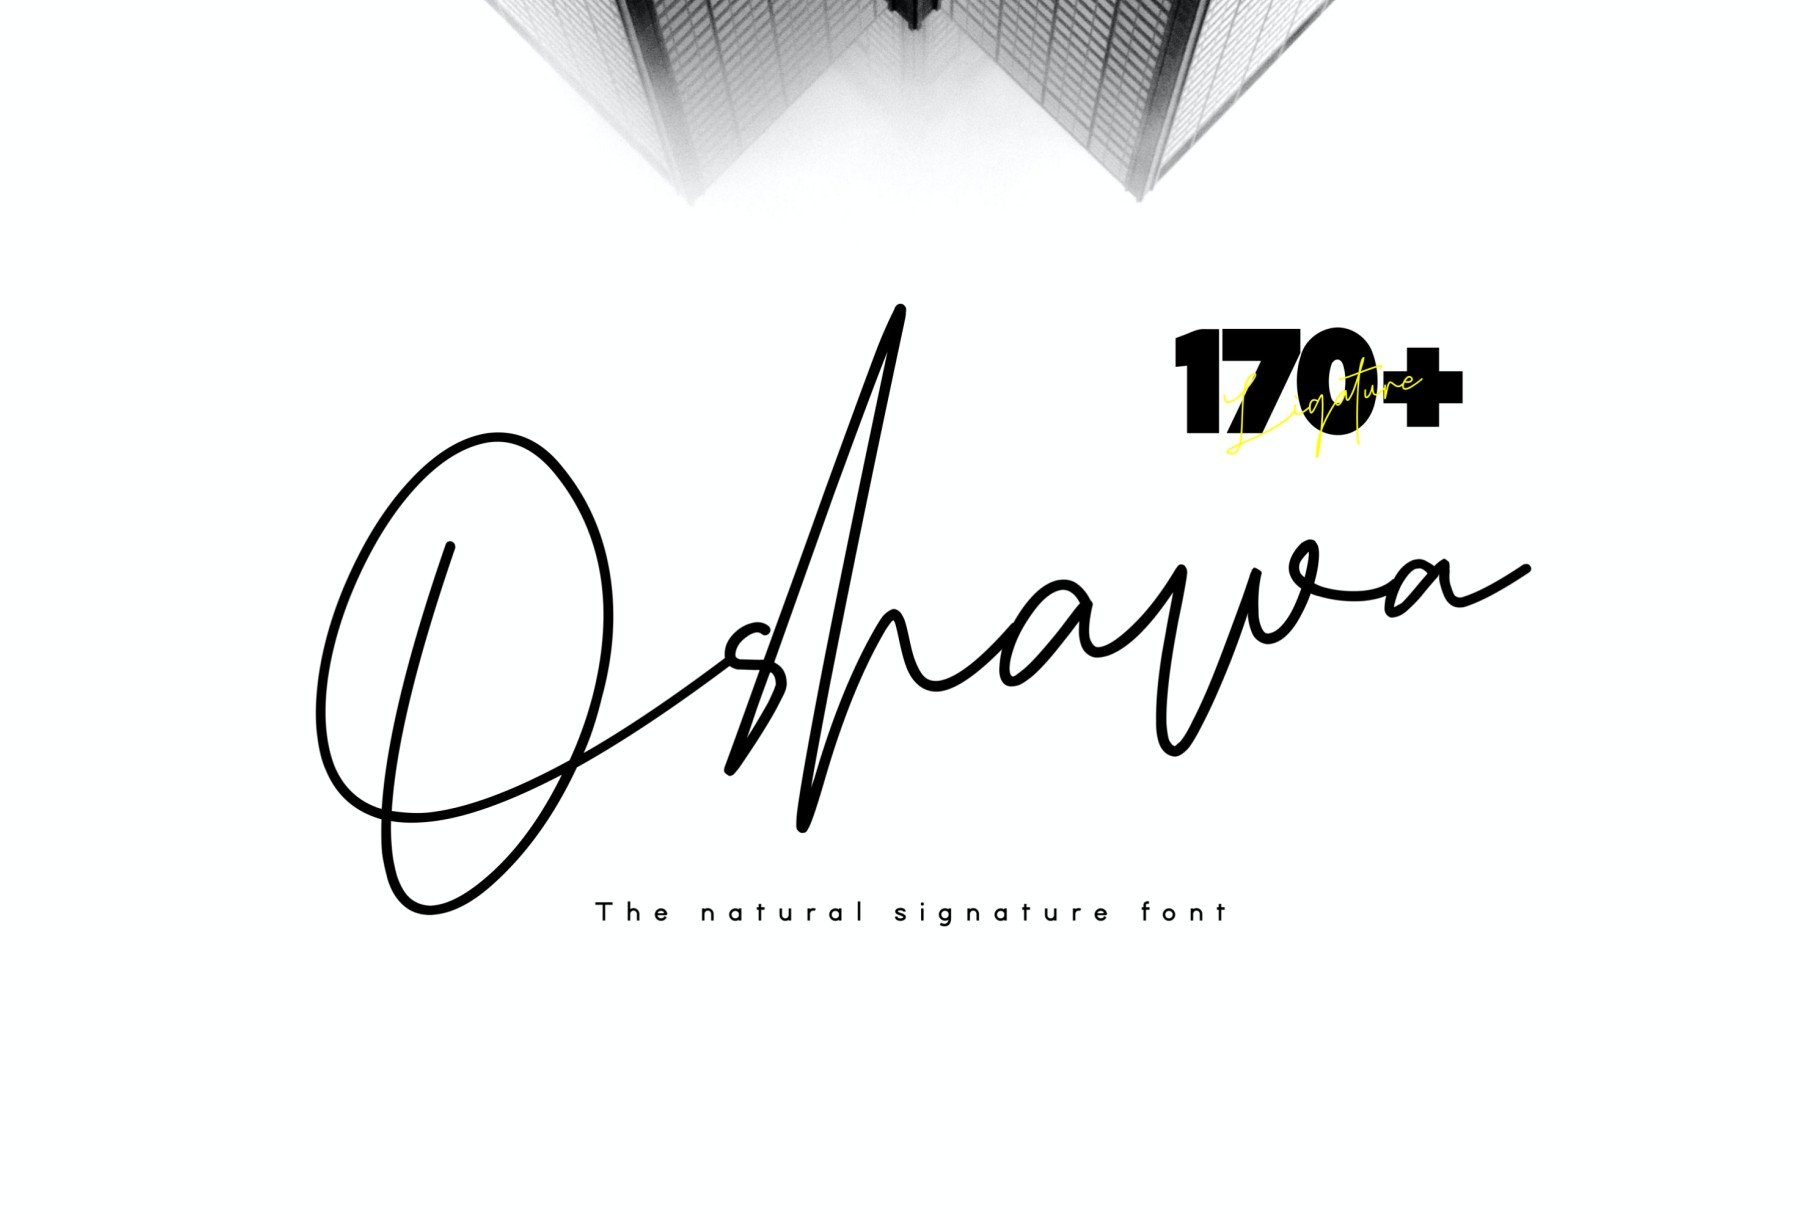 Oshawa - Signature Font cover image.